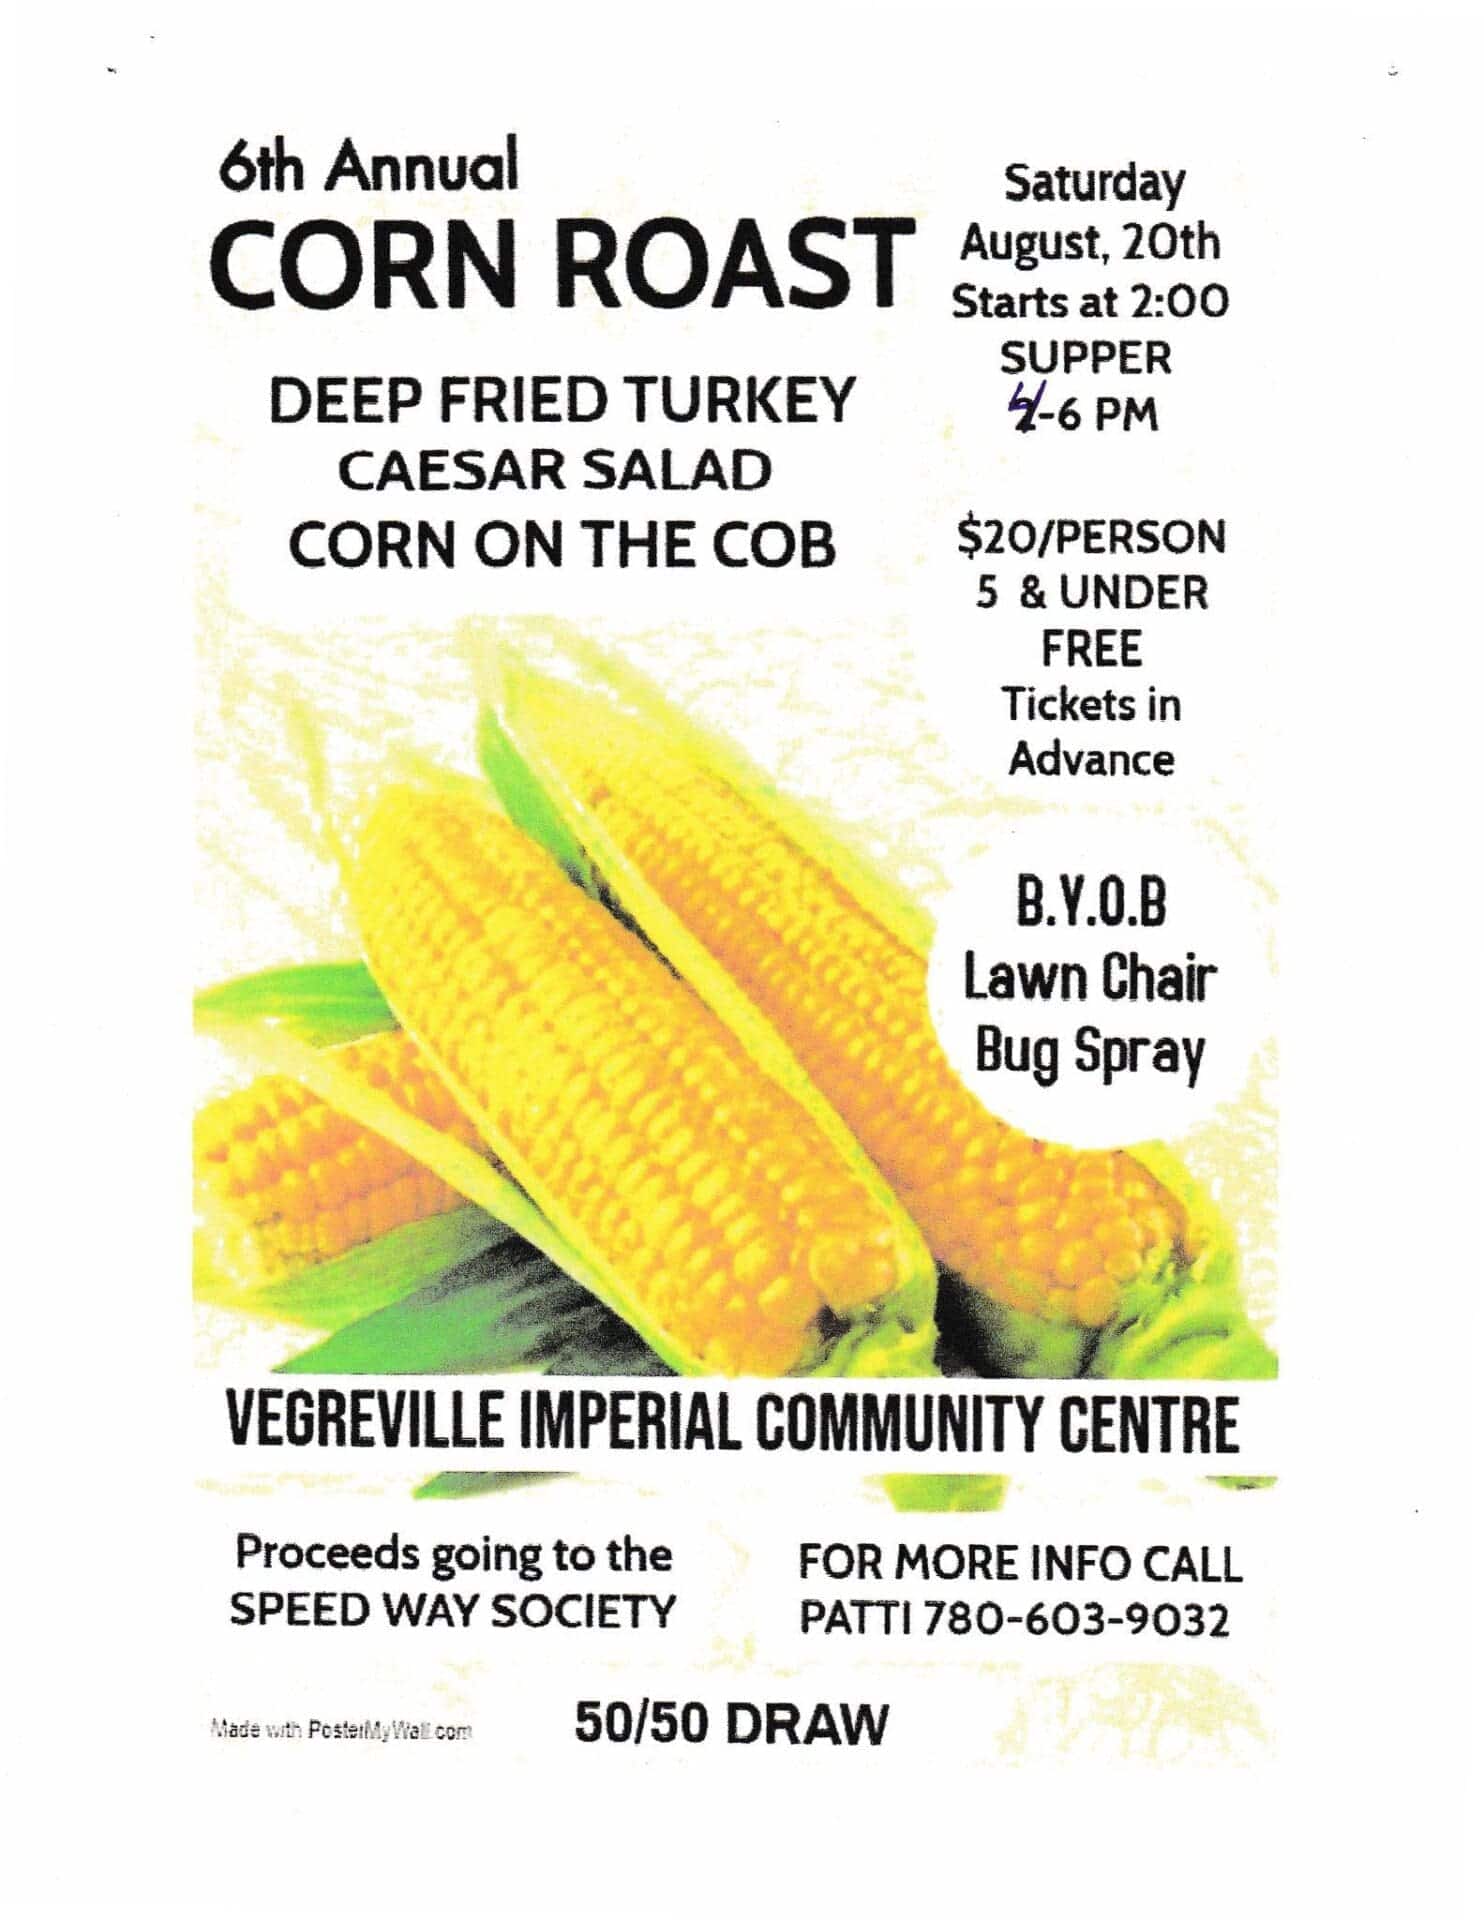 Vegreville Annual Corn Roast Go East of Edmonton